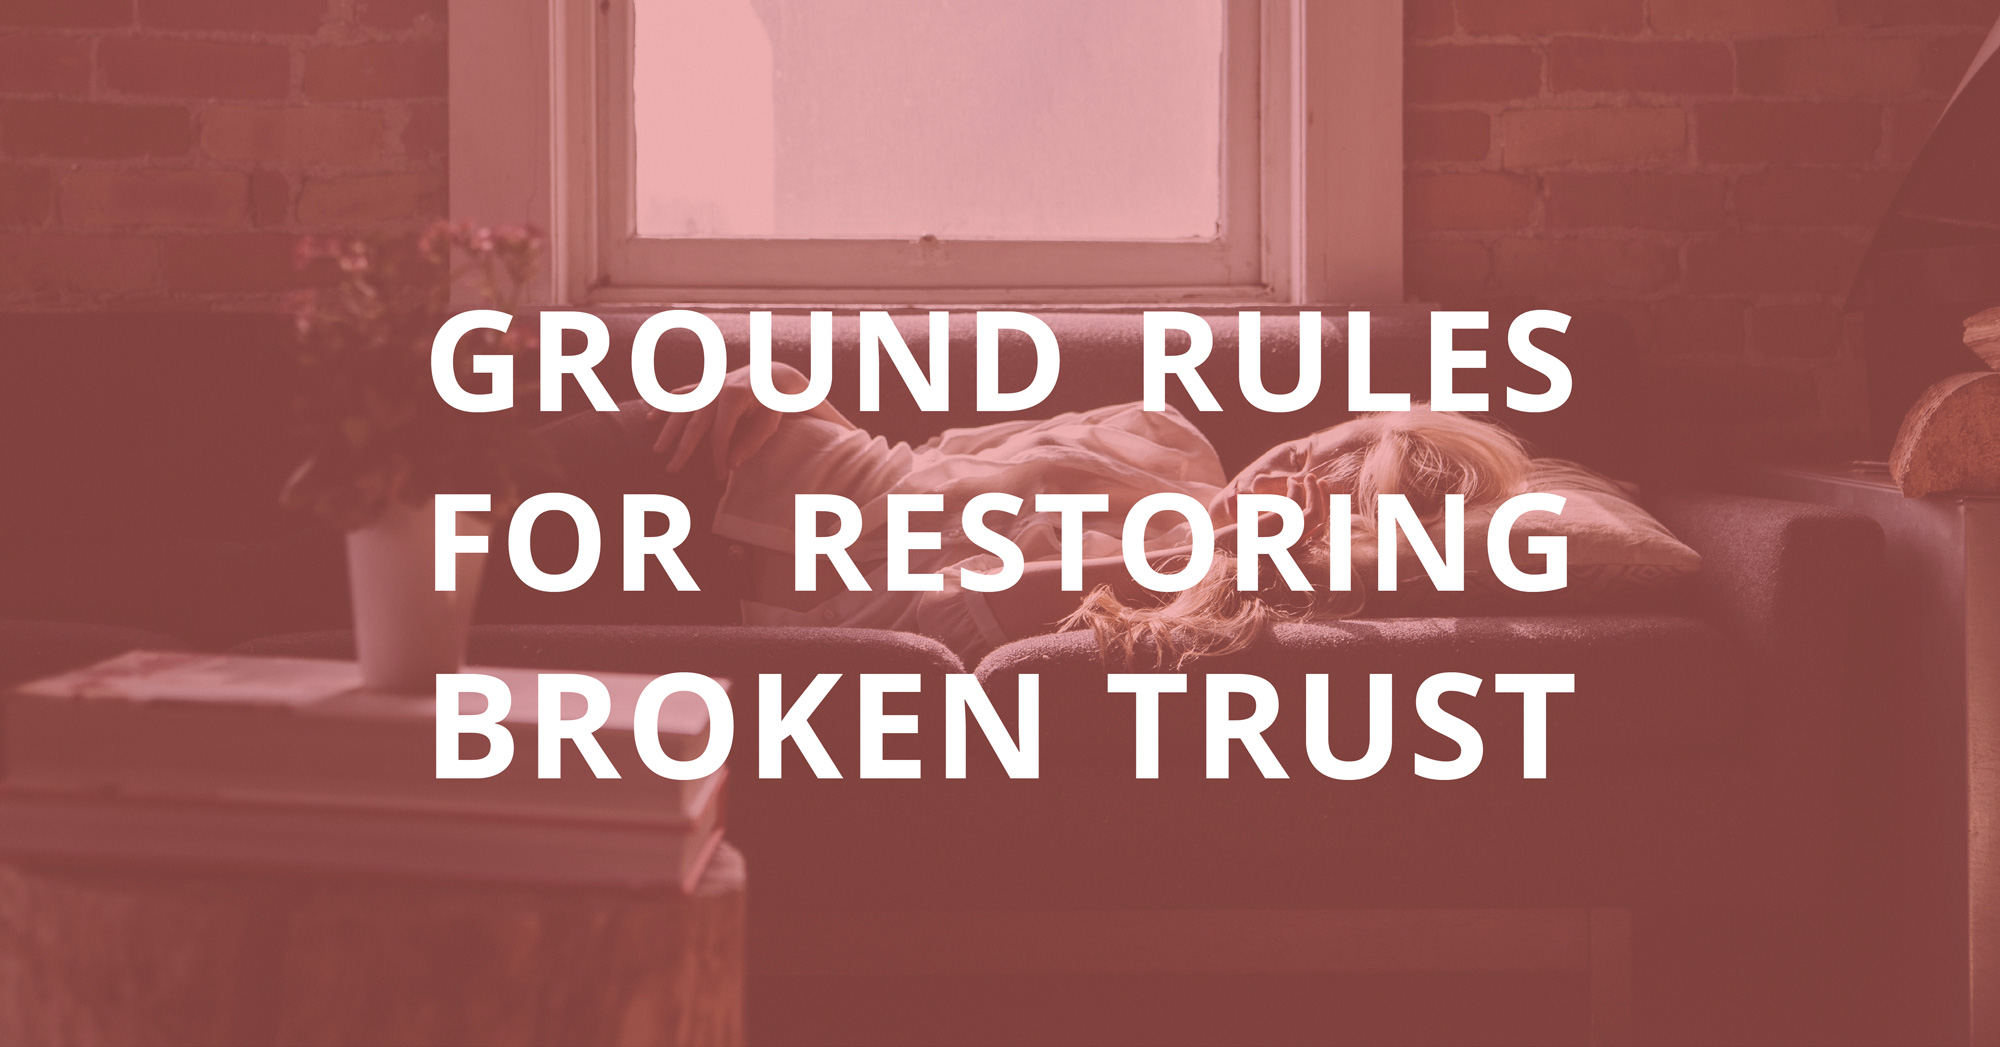 Ground Rules for Restoring Broken Trust pic